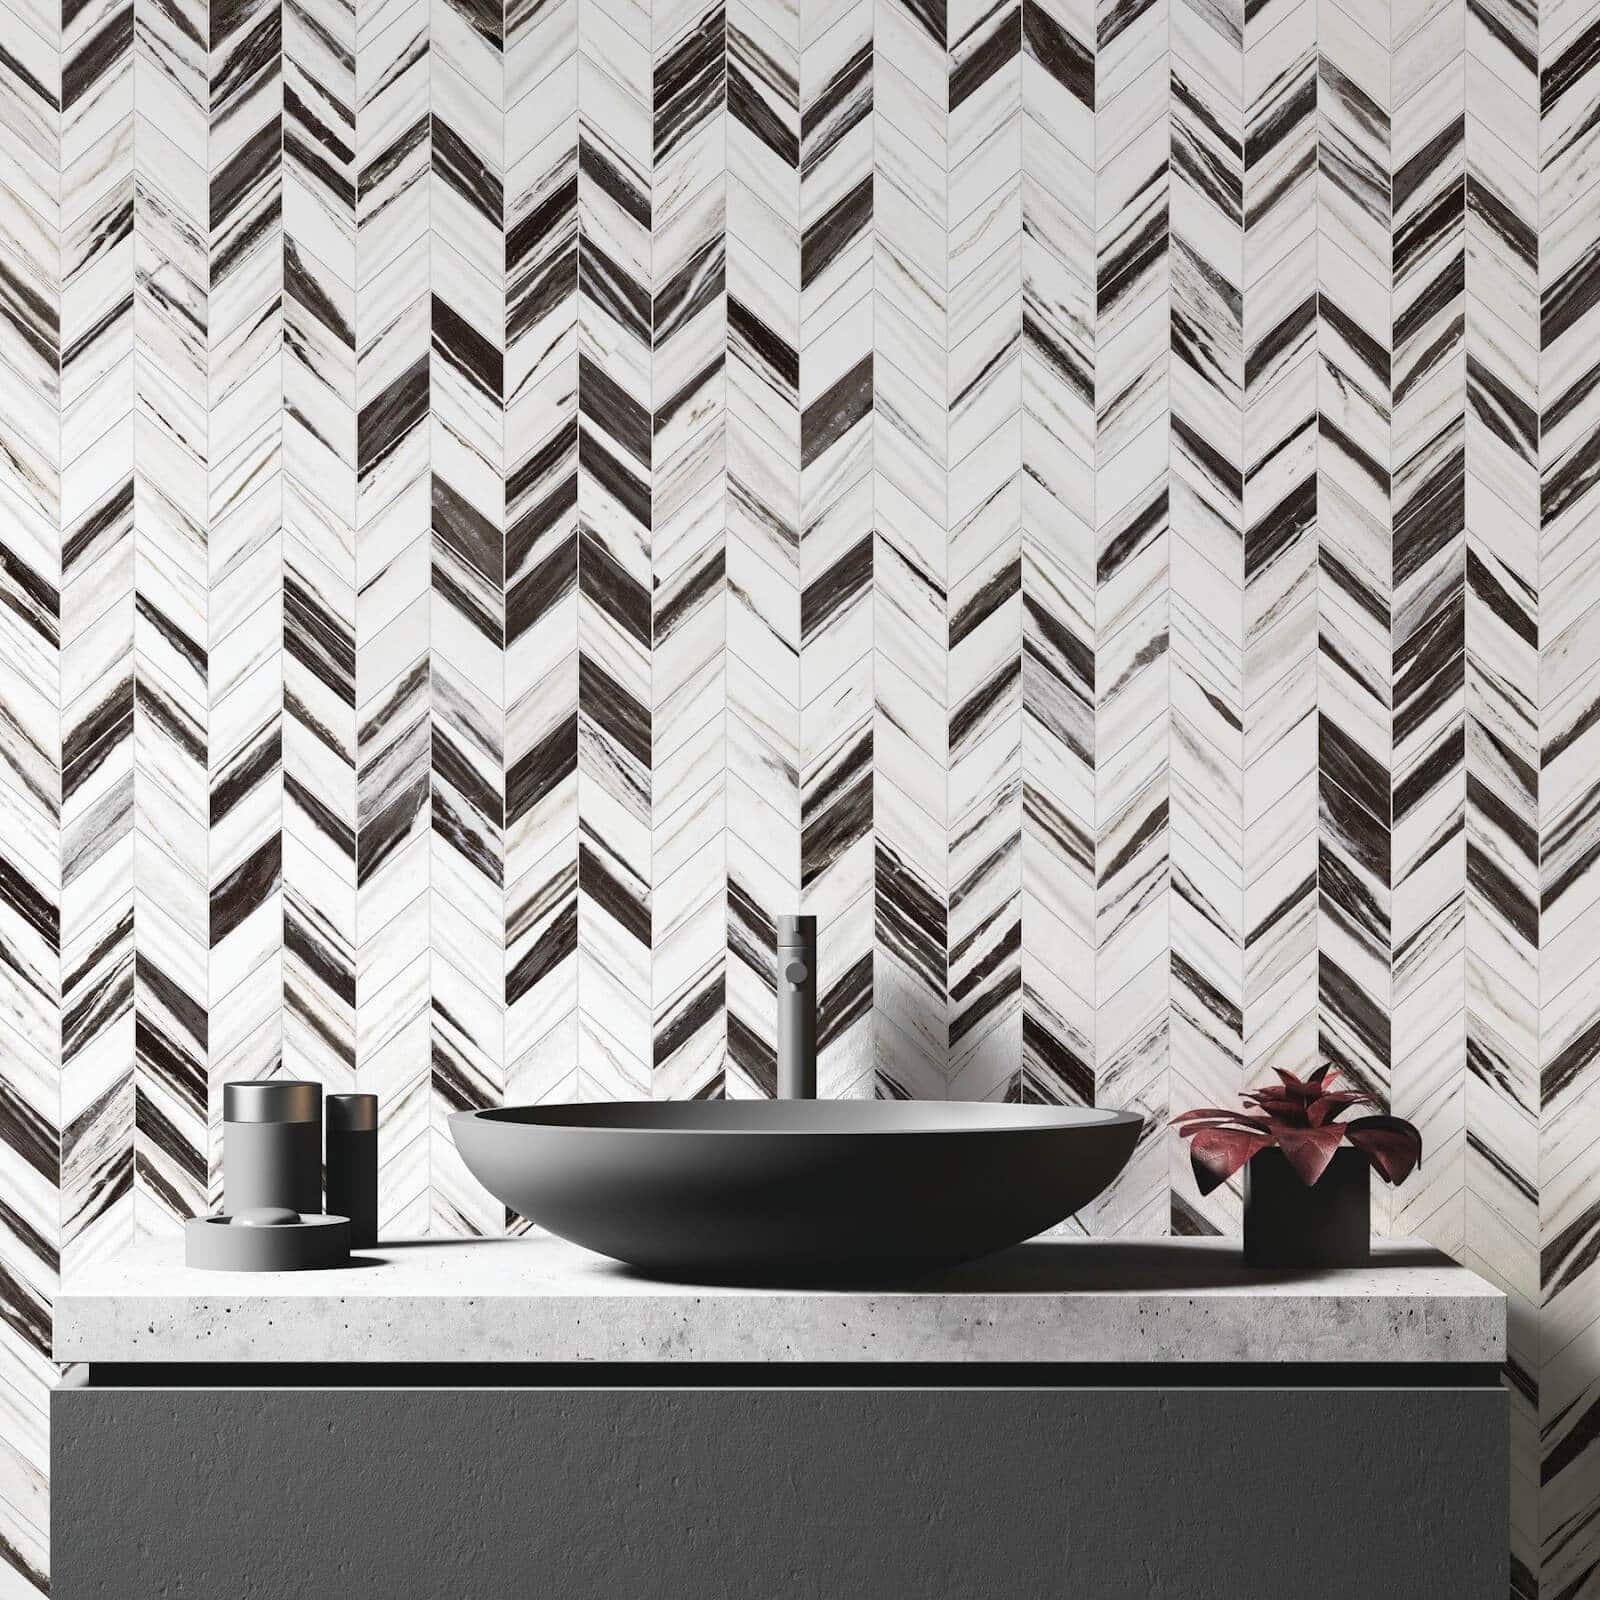 Mosaic chevron tile bathroom backsplash in a wood look